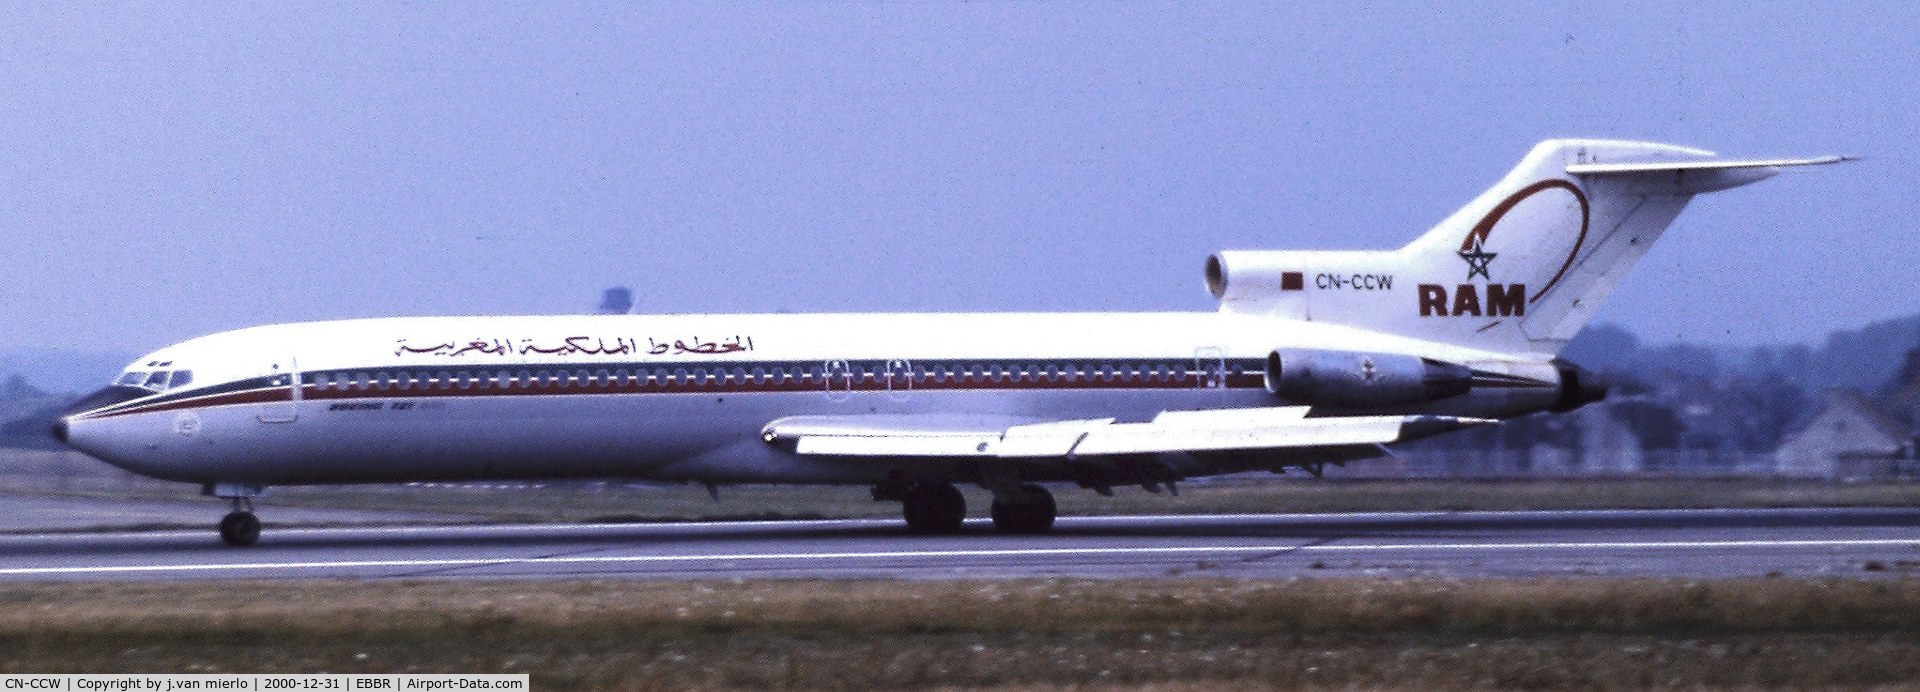 CN-CCW, 1975 Boeing 727-2B6 C/N 21068, Landing at Brussels 25L '80s